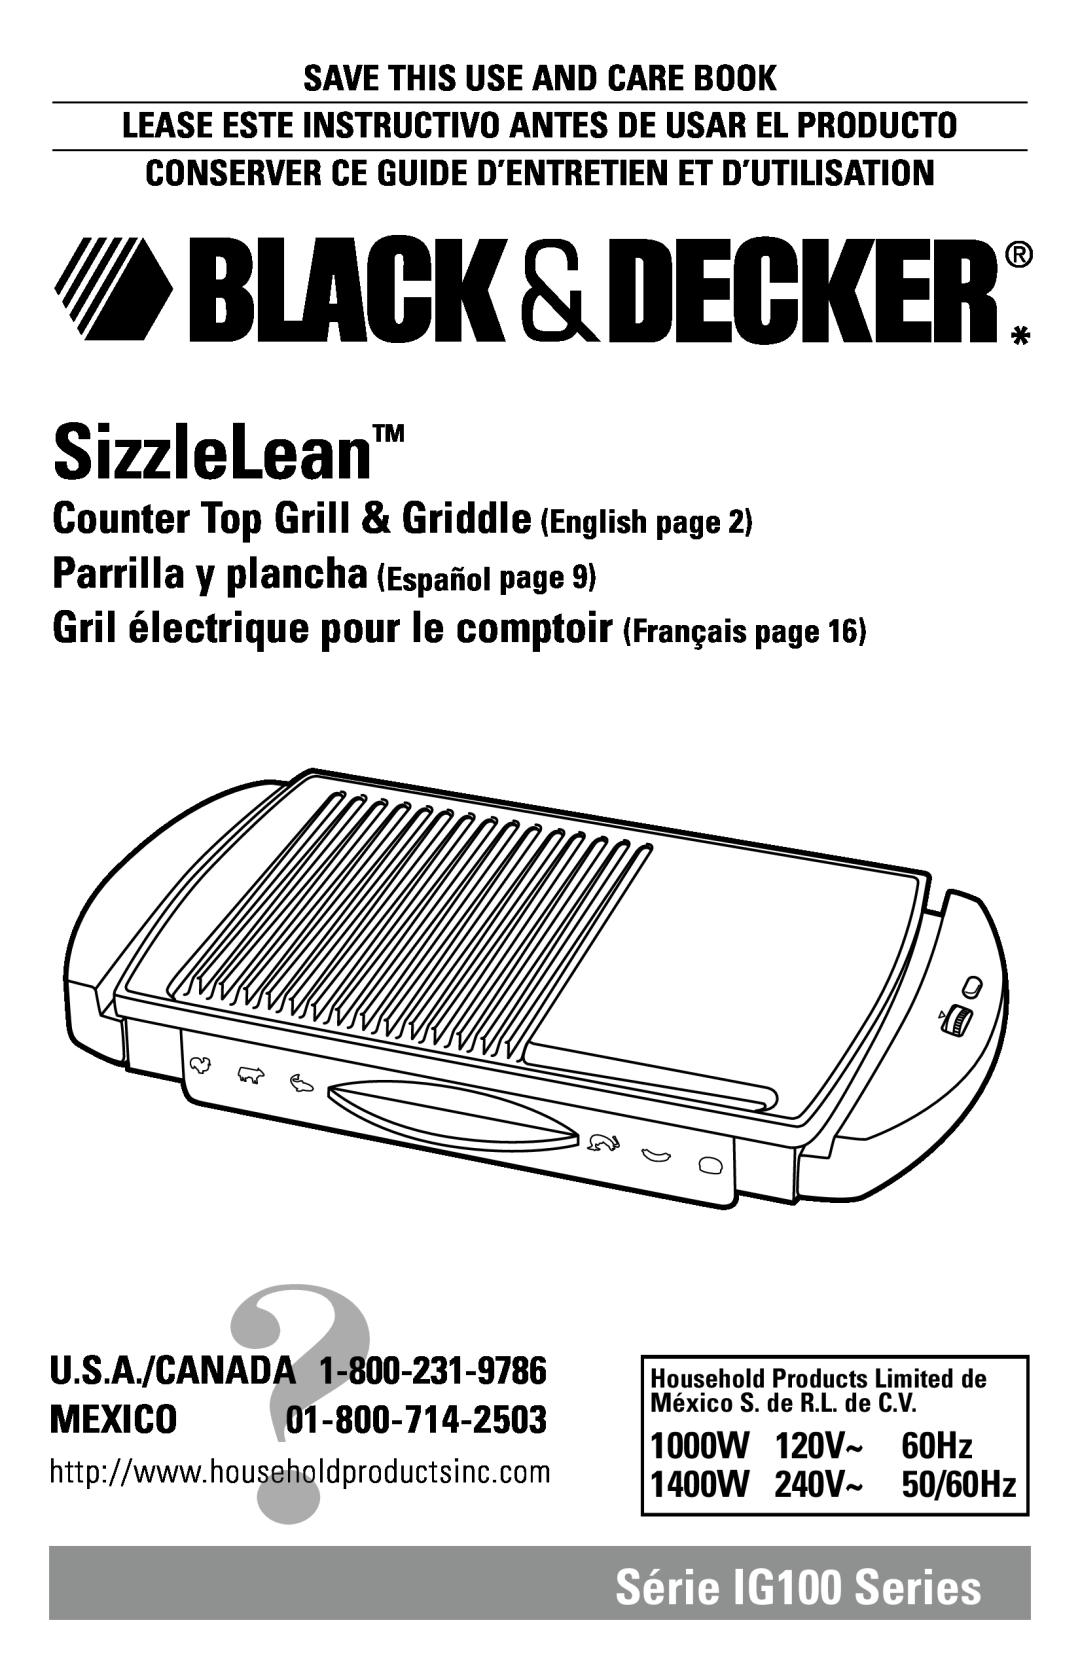 Black & Decker manual Série IG100 Series, Save This Use And Care Book, Conserver Ce Guide D’Entretien Et D’Utilisation 